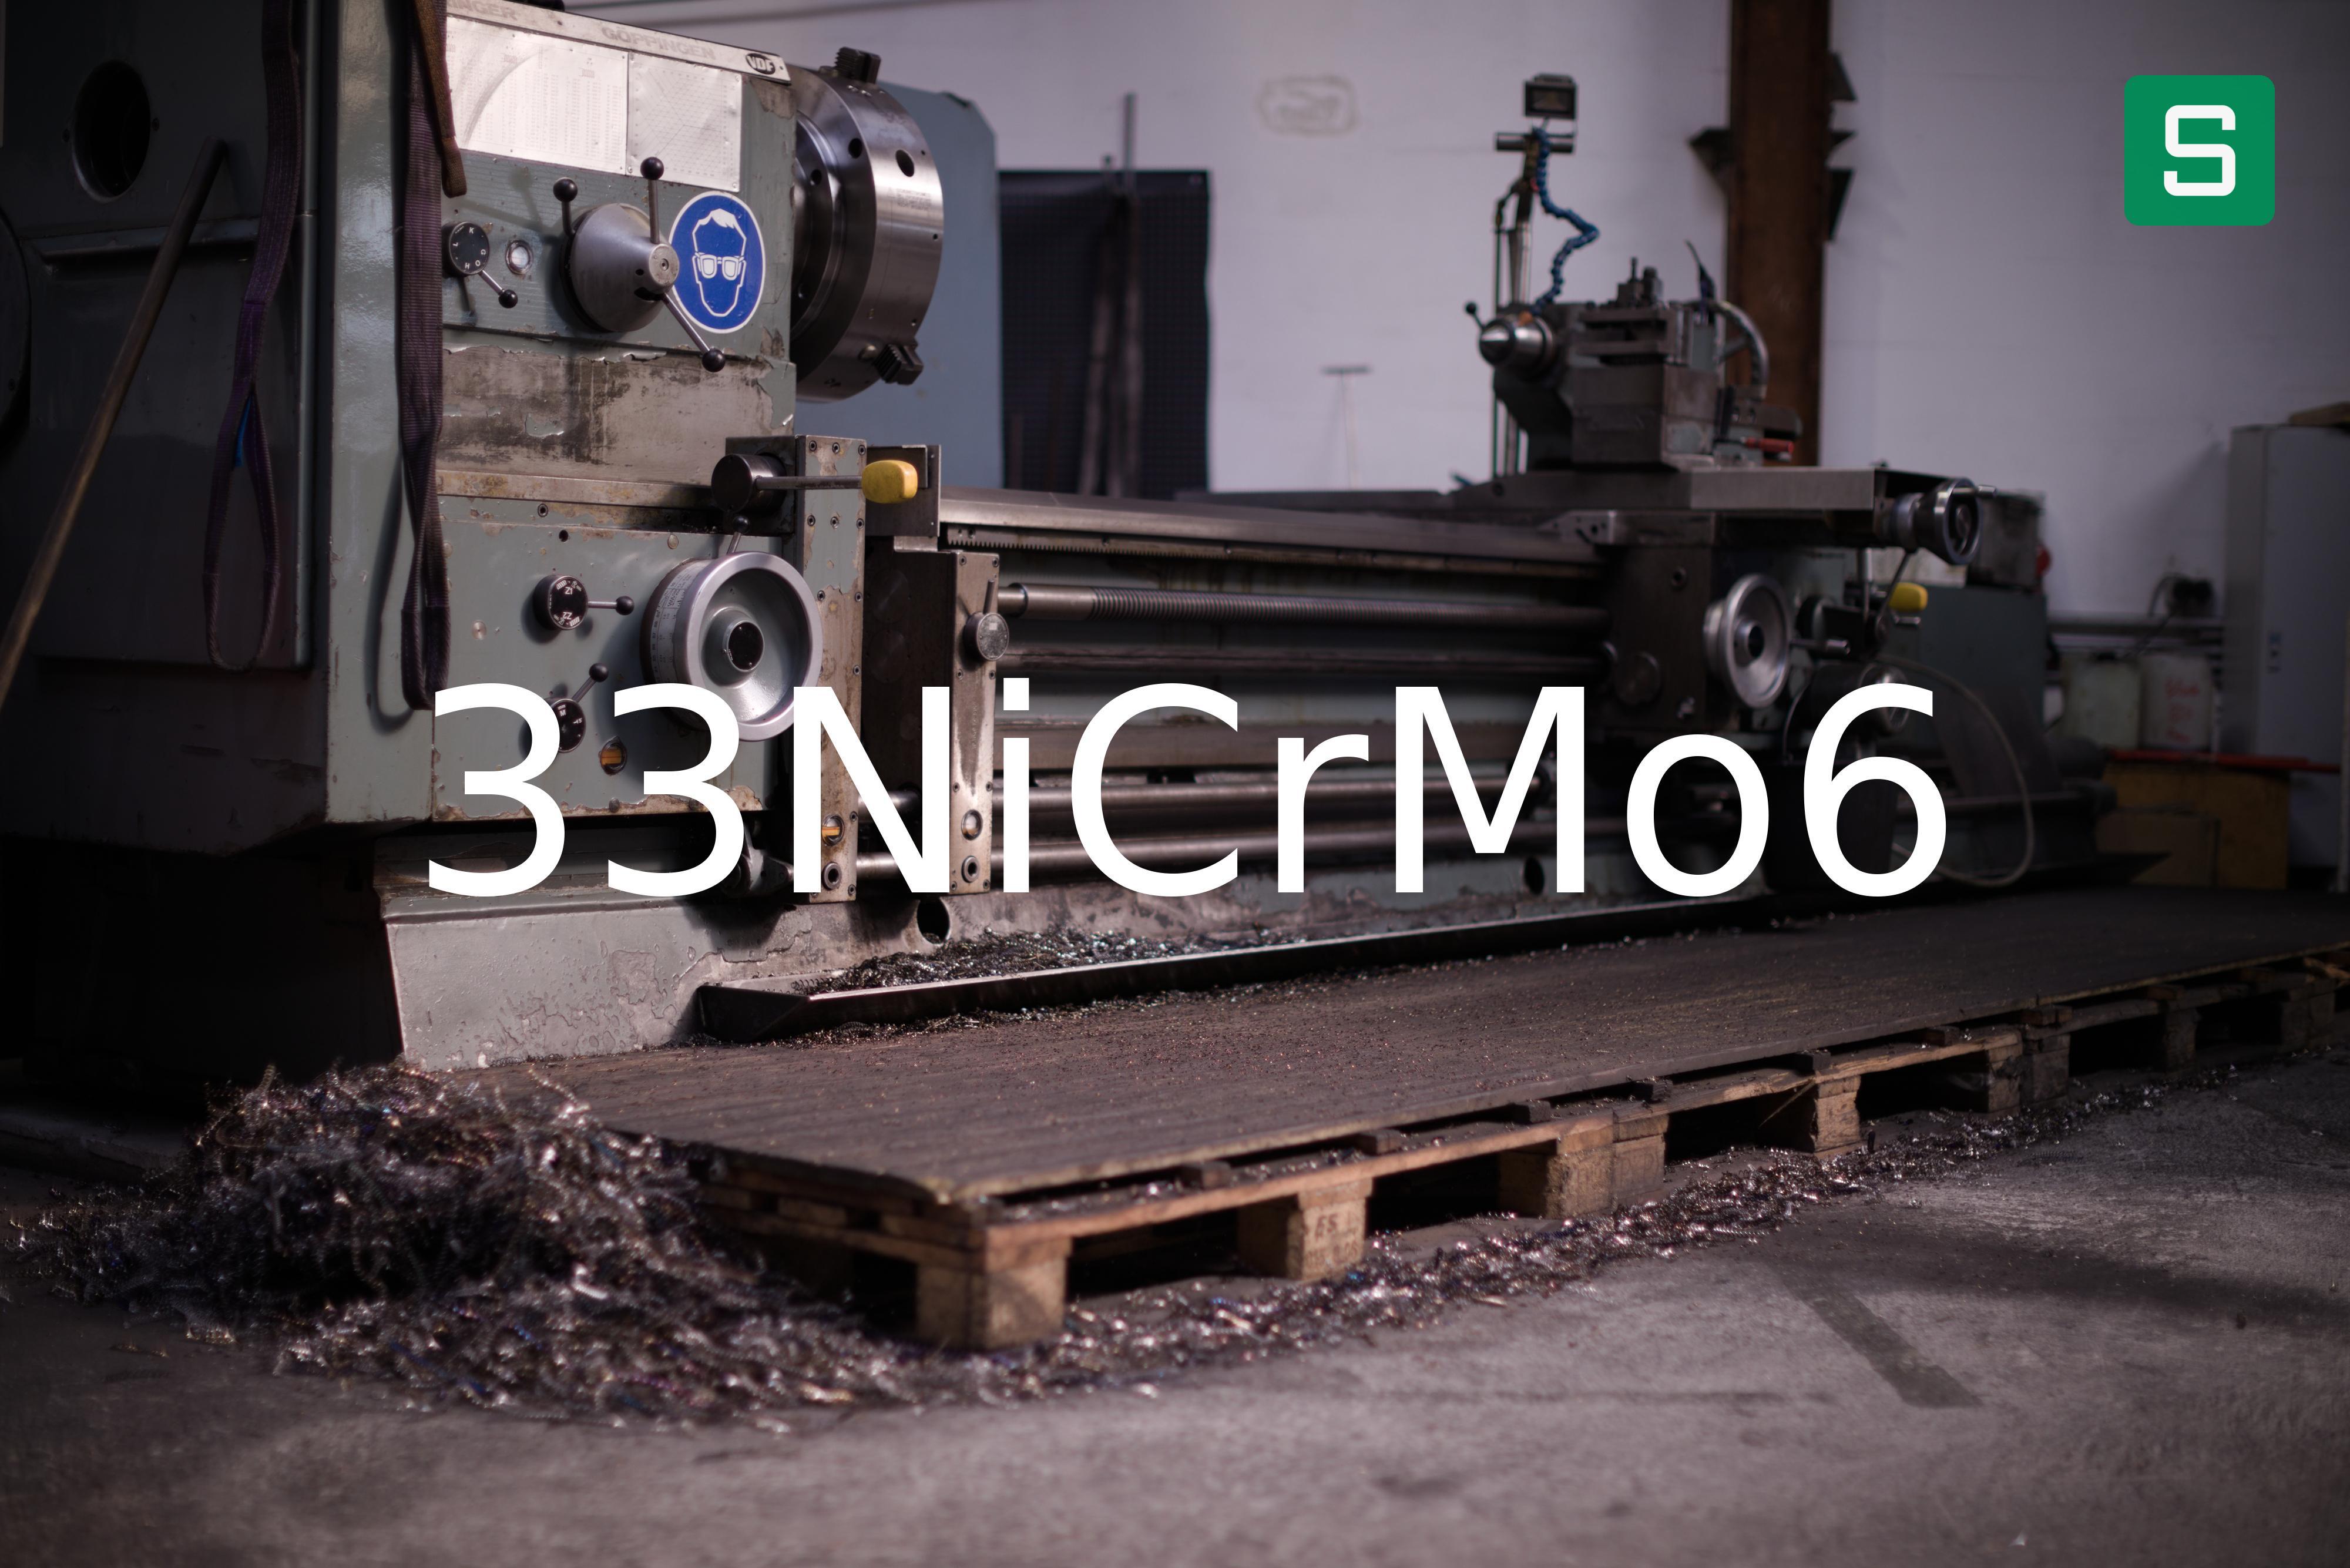 Steel Material: 33NiCrMo6